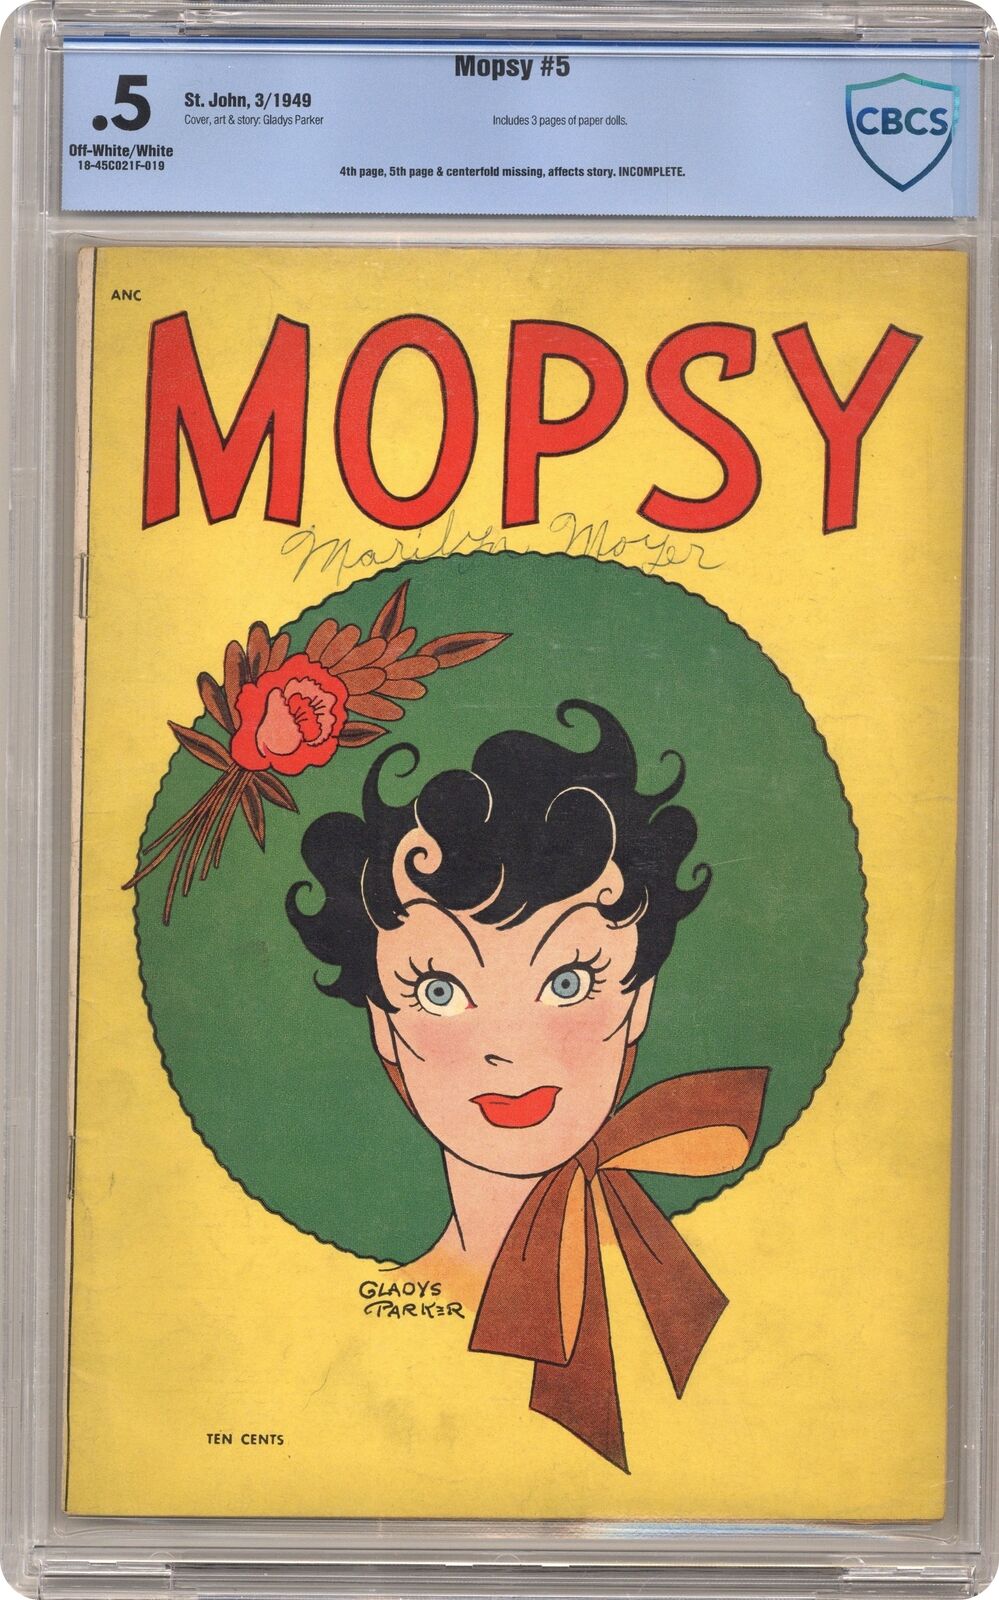 Mopsy #5 CBCS 0.5 1949 18-45C021F-019